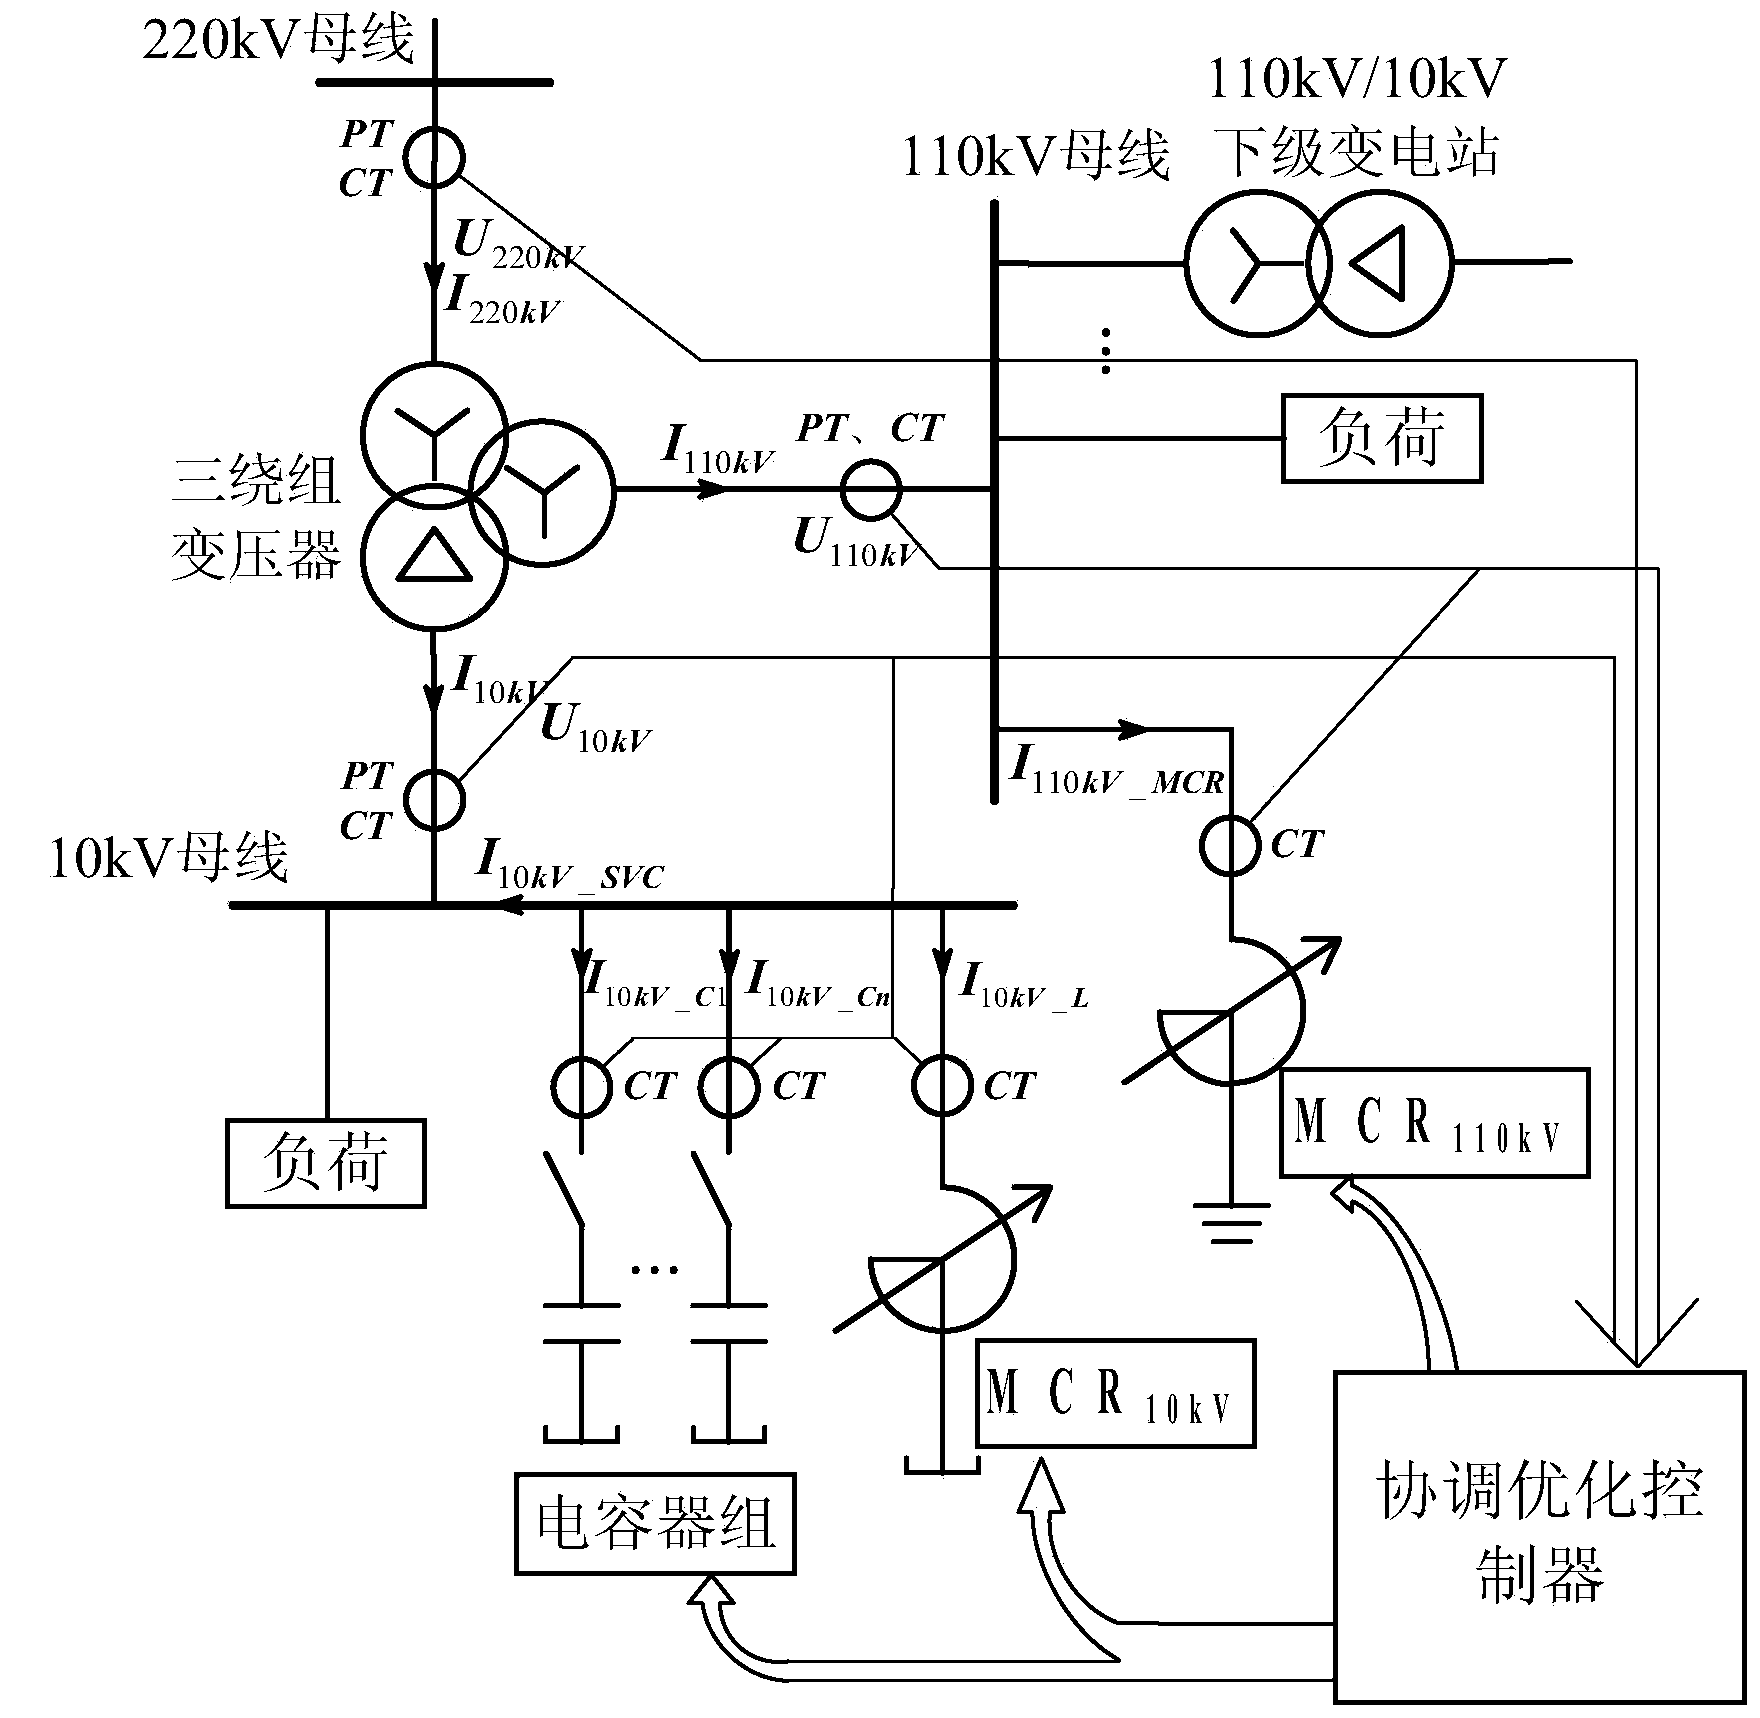 Multi-side voltage reactive power coordination optimal control system for transformer substation